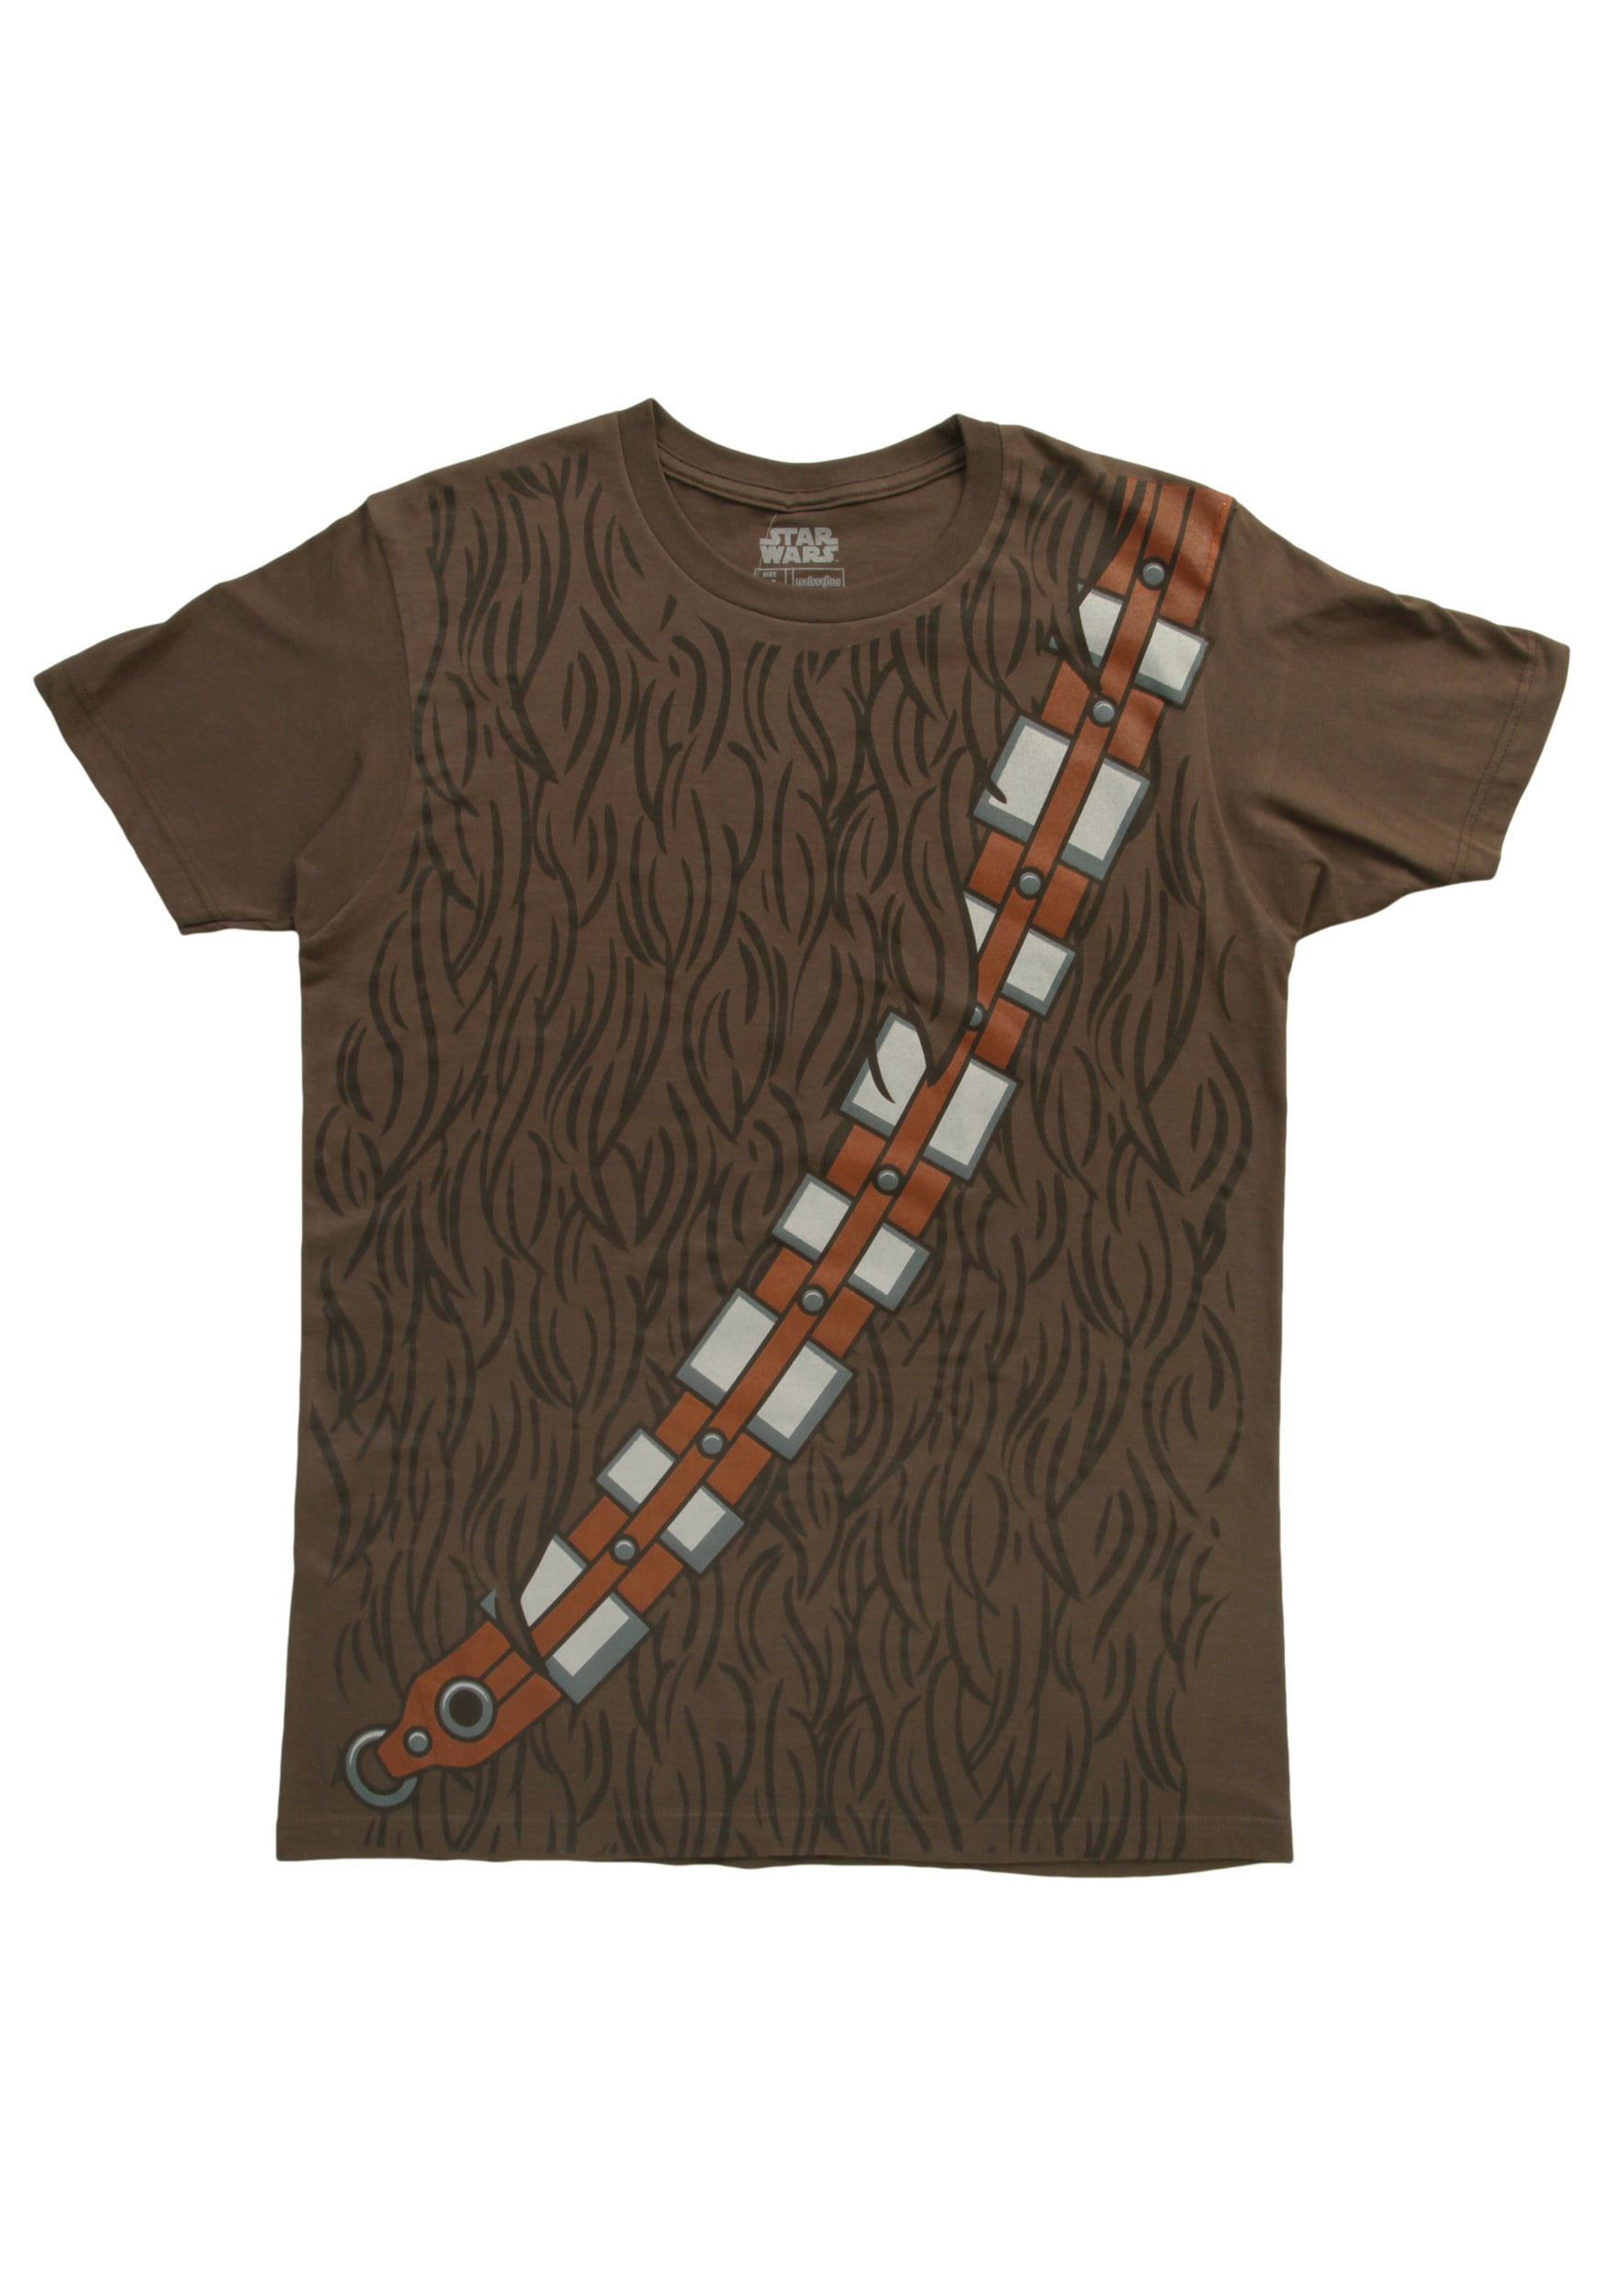 New Star Wars Chewbacca Costume Vintage Throwback Men's T-Shirt